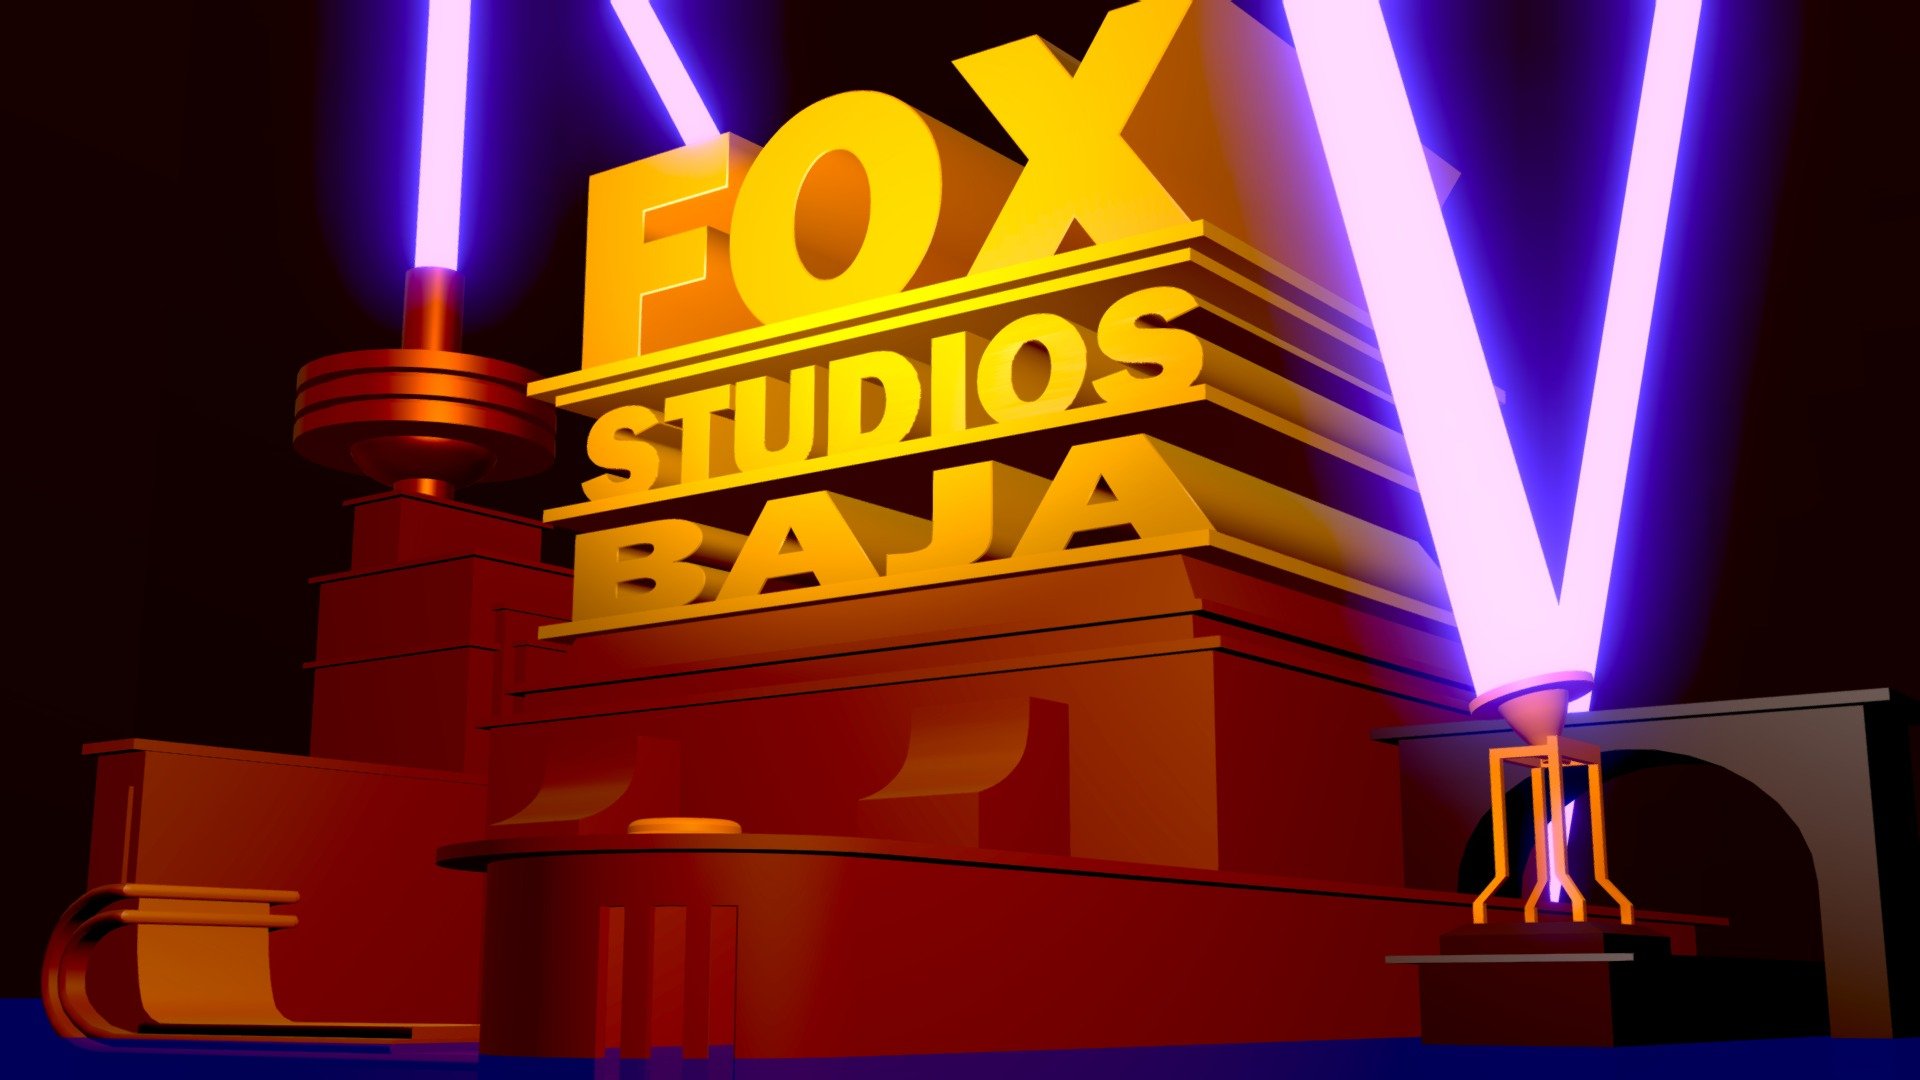 fox-studios-baja-logo-1999-remake-download-free-3d-model-by